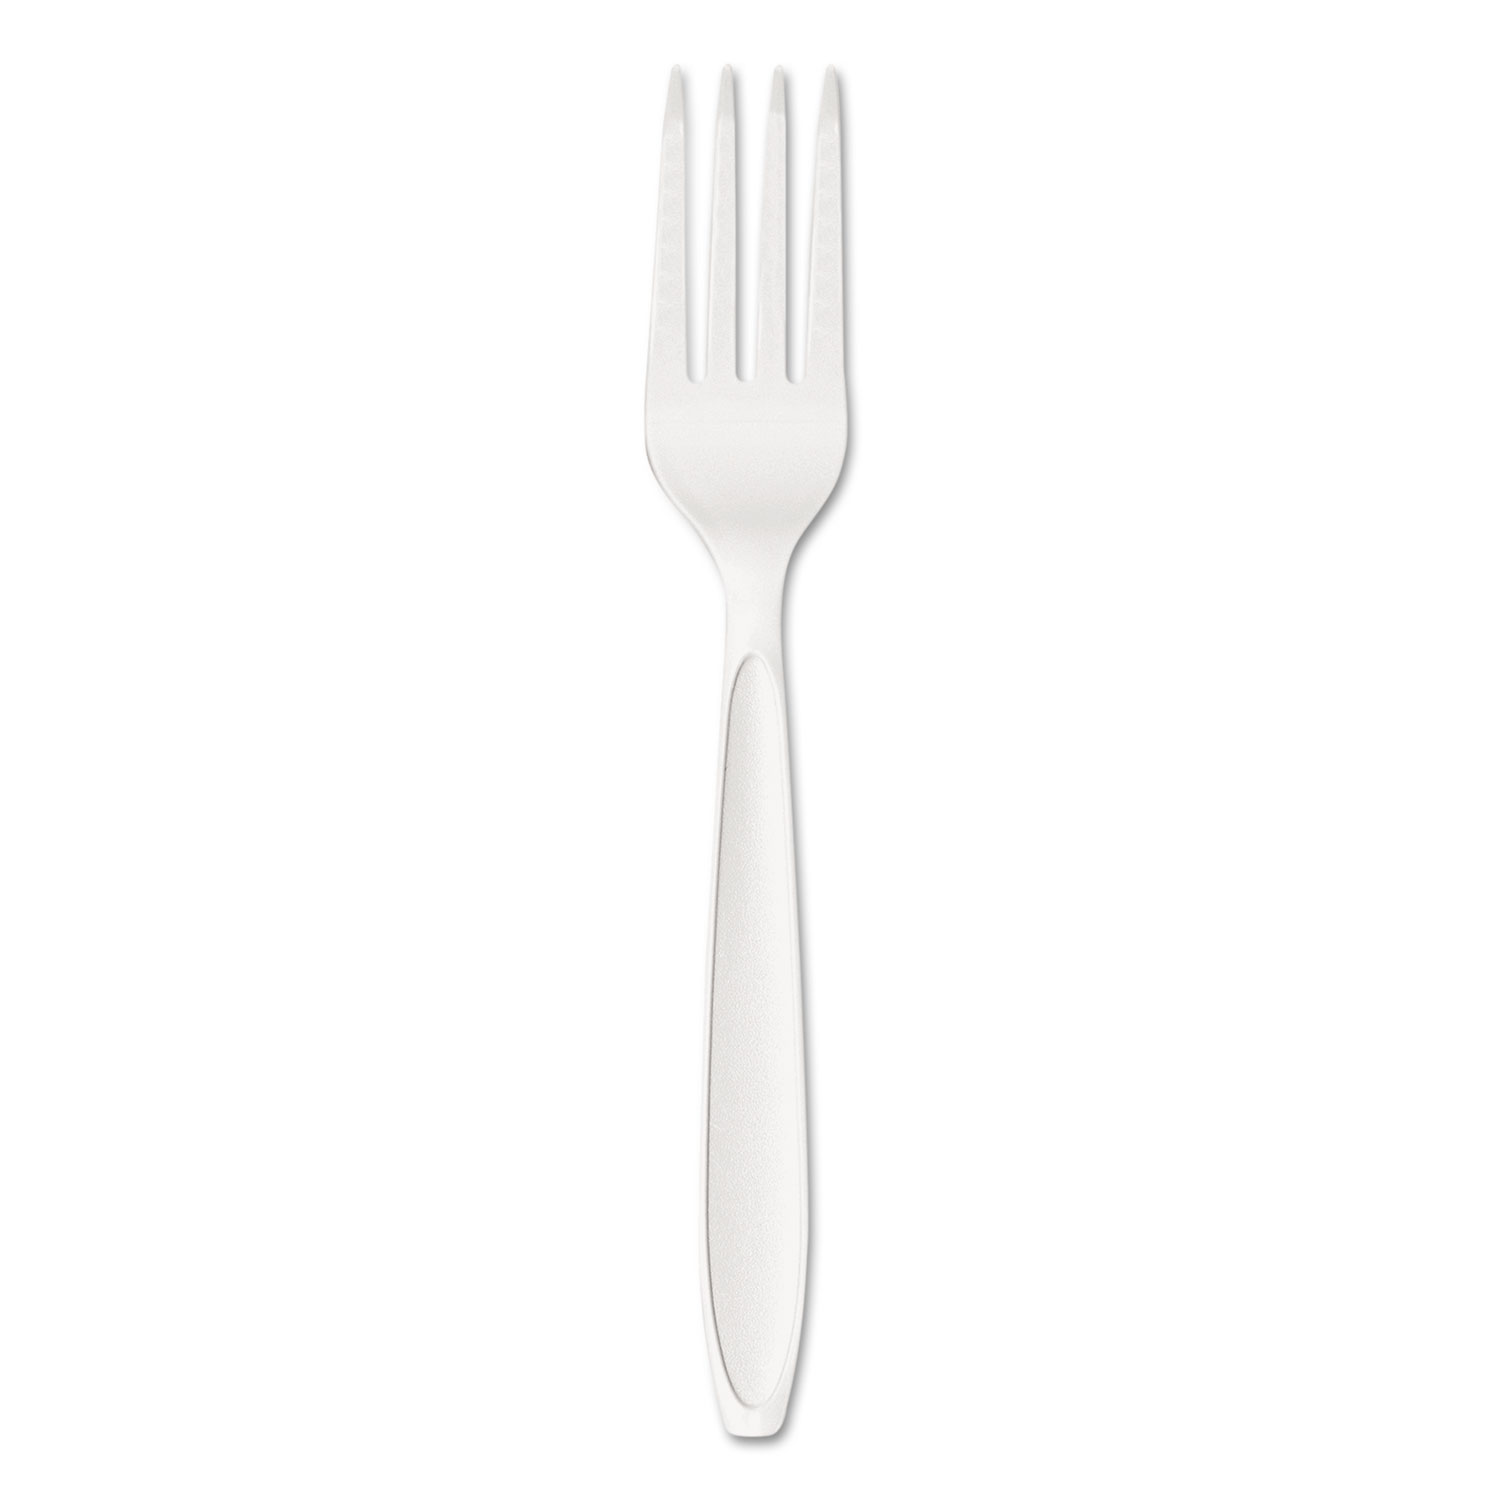 Reliance Medium Heavy Weight Cutlery, Standard Size, Fork, Bulk, White, 1000/CT